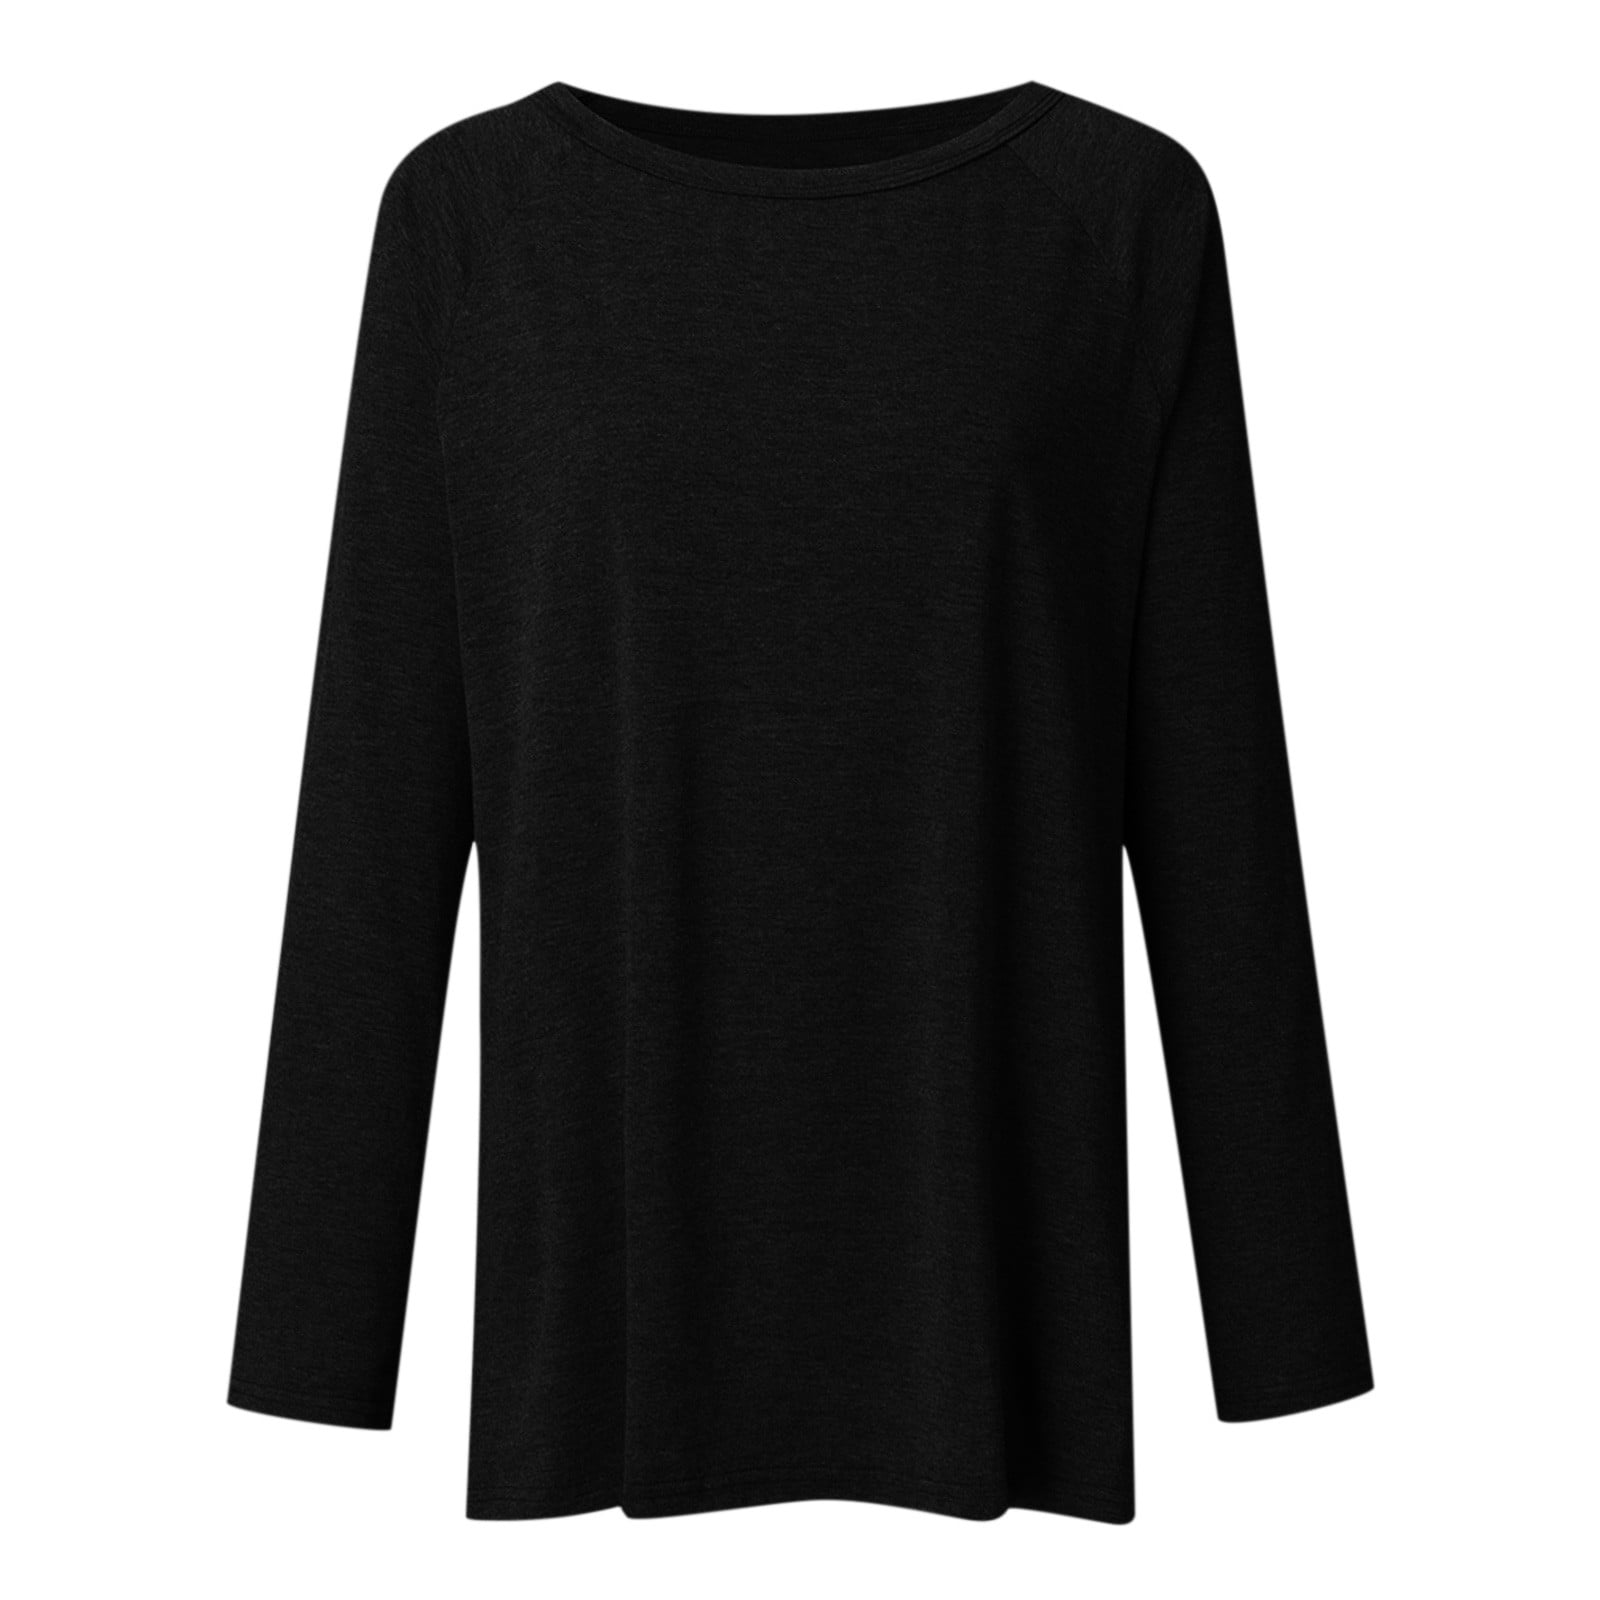 HAPIMO Rollbacks Women's Long Sleeve Shirts Fashion Clothing